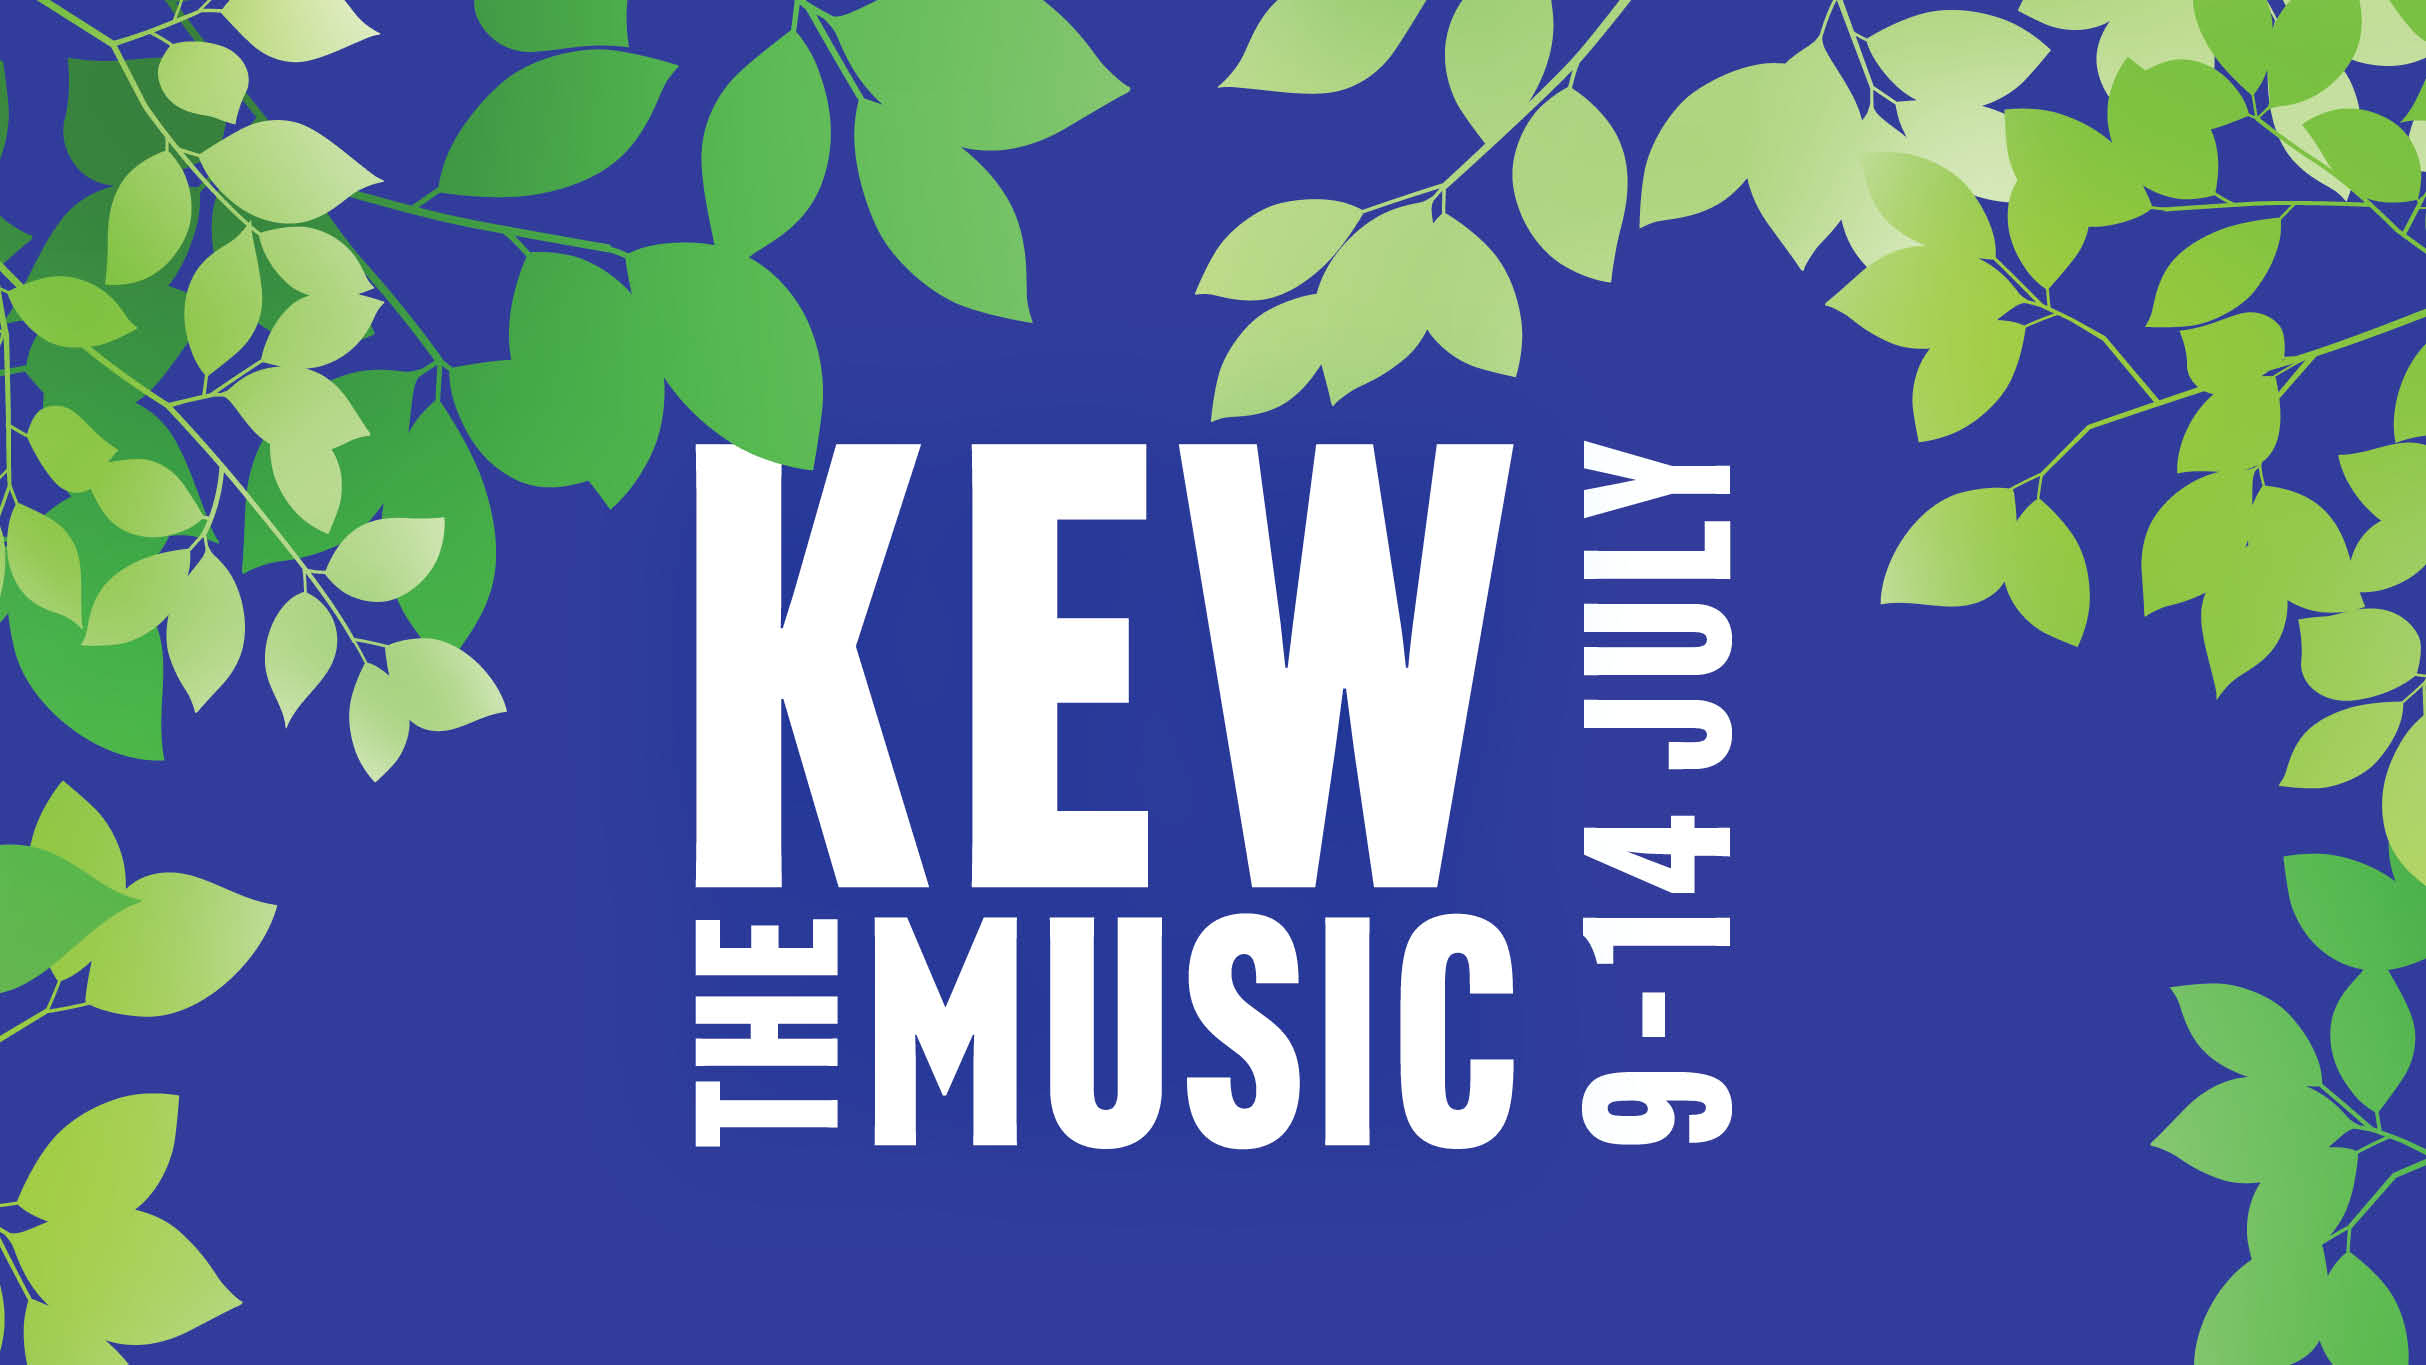 Kew the Music - Passenger in London promo photo for Ticketmaster presale offer code